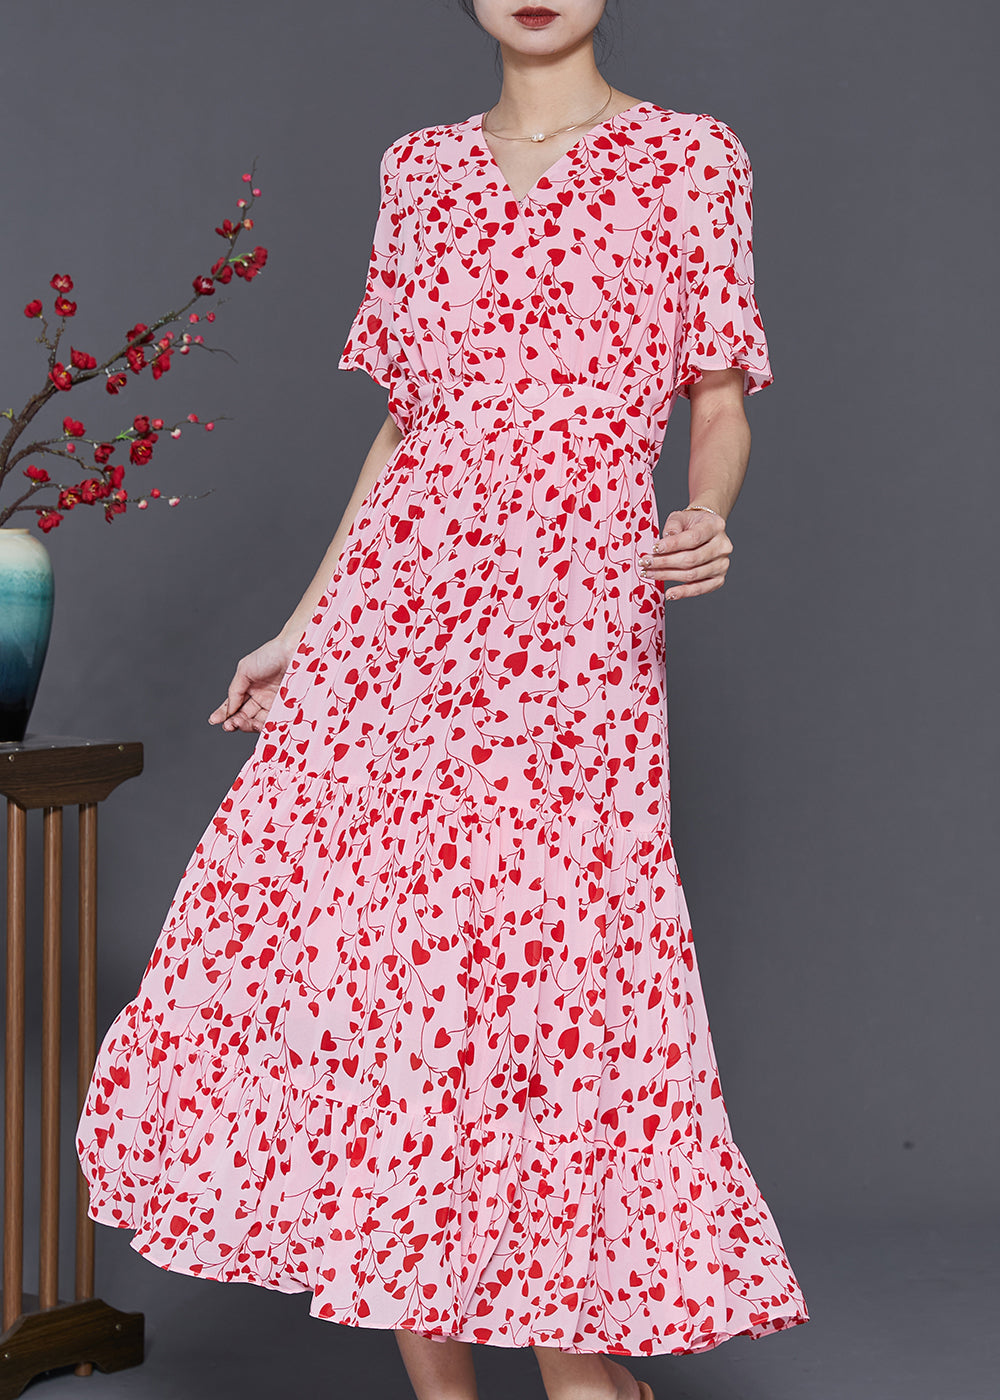 Art Red Print Exra Large Hem Chiffon Dresses Summer